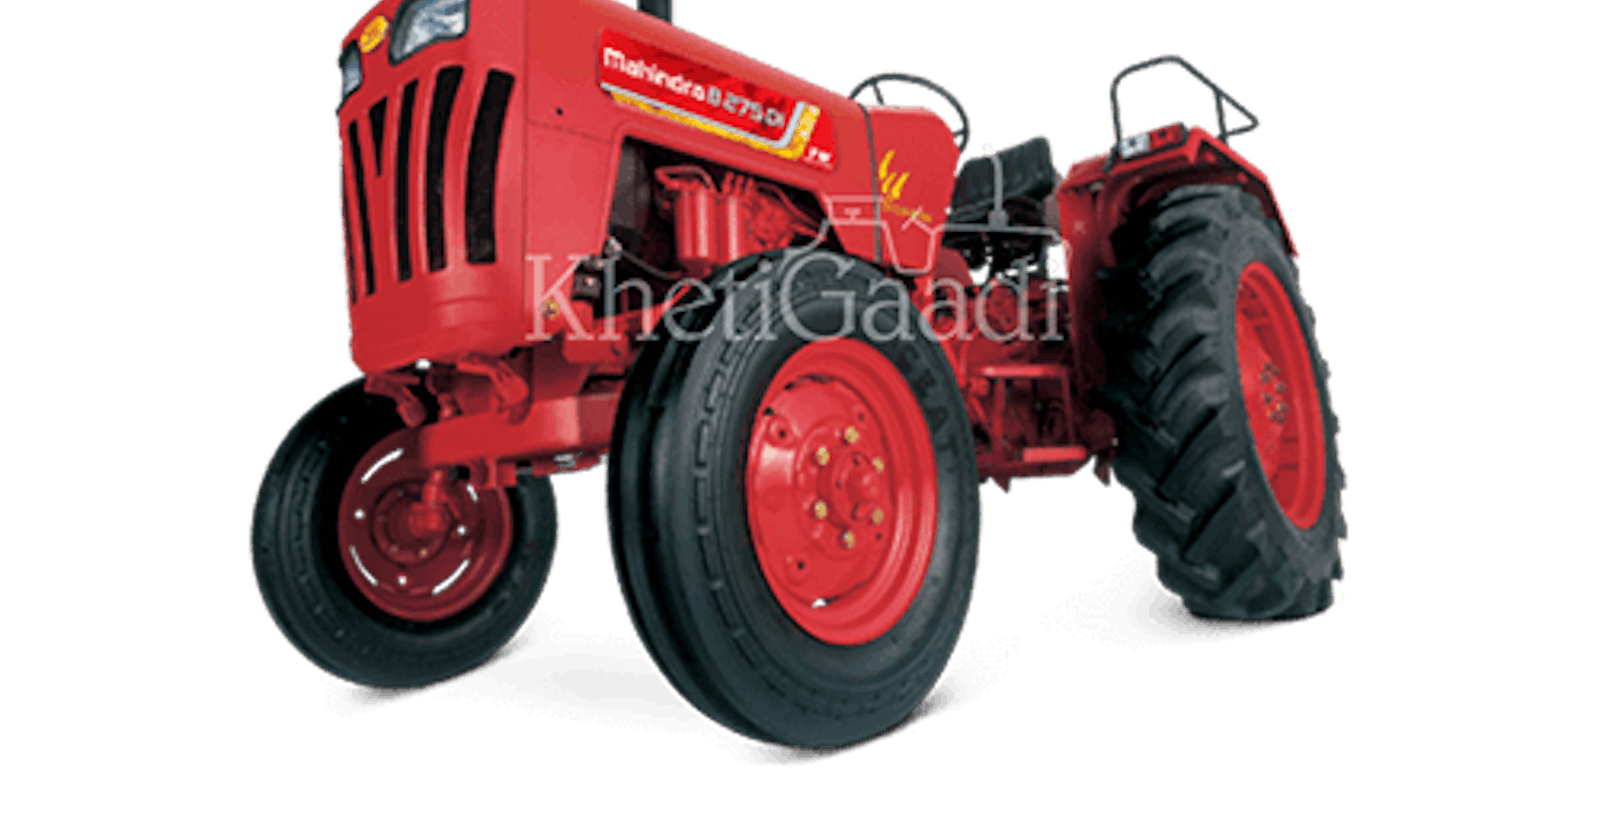 Mahindra 275 DI TU Tractor, Price and Specifications- Khetigaadi 2022